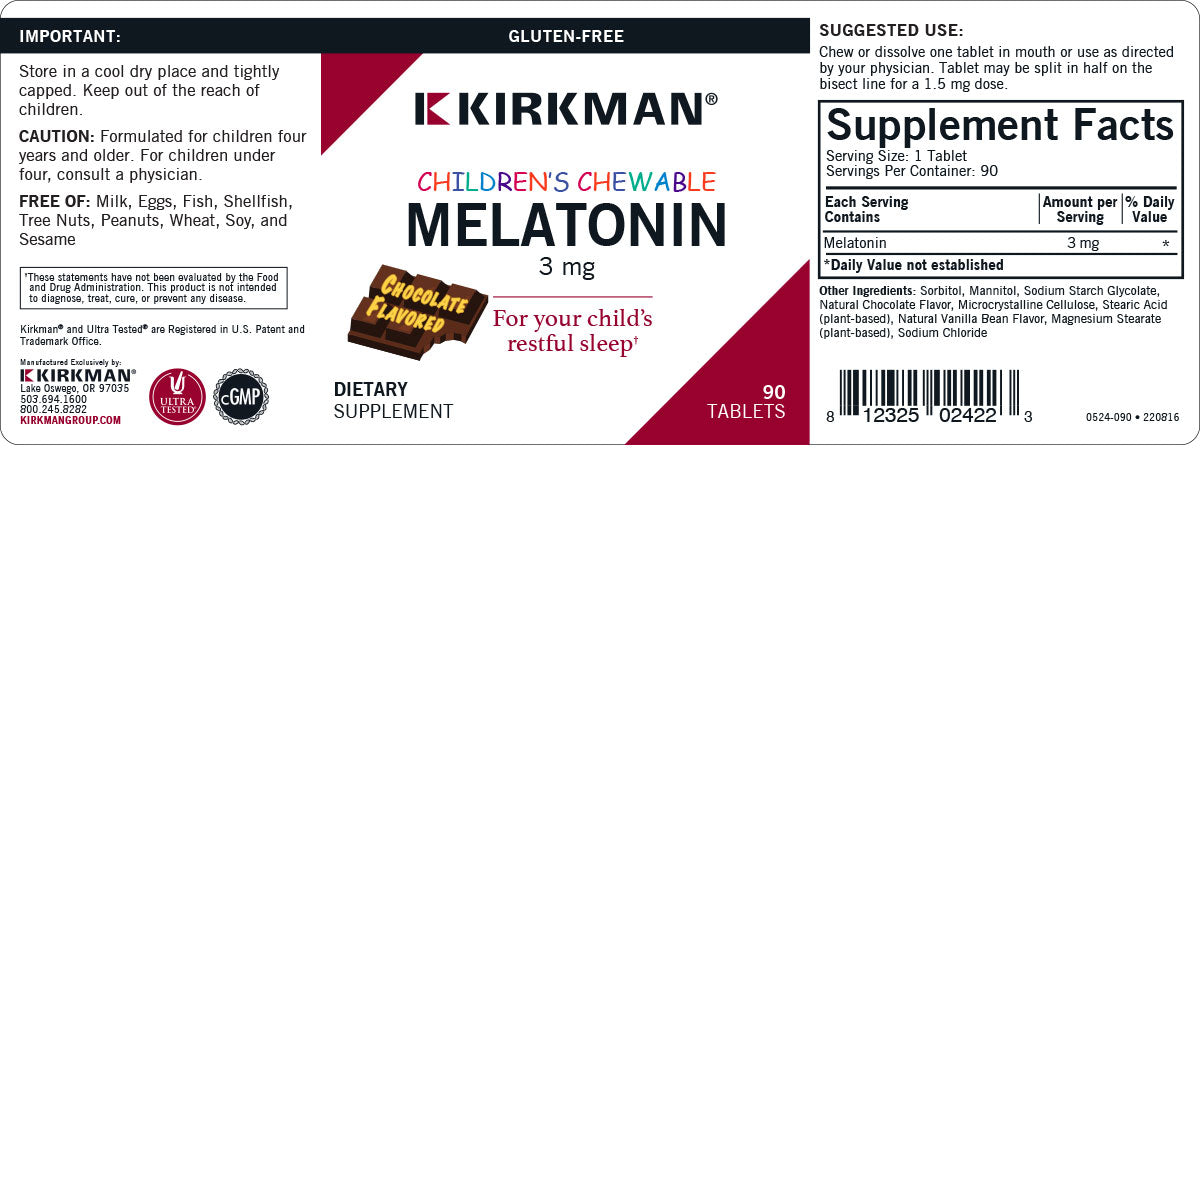 Children’s Chewable Melatonin 3 mg Chocolate Tablets